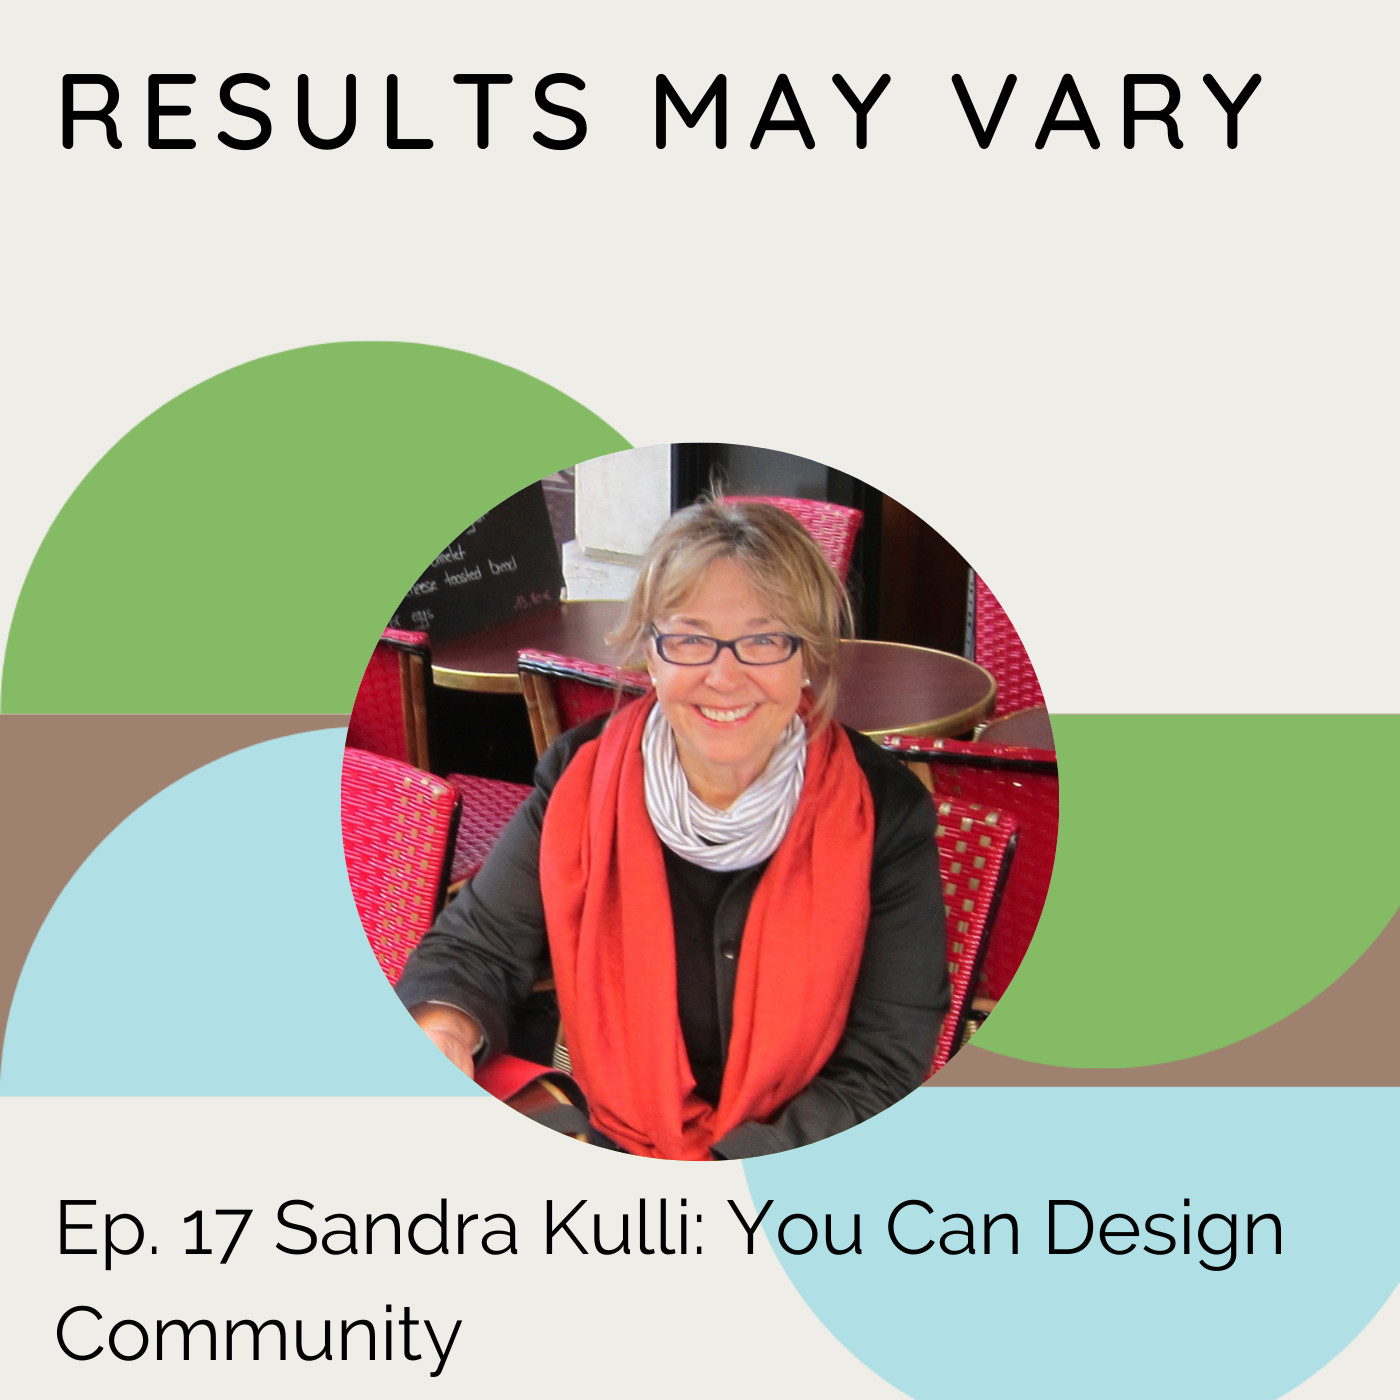 RMV 17 Sandra Kulli: You Can Design Community